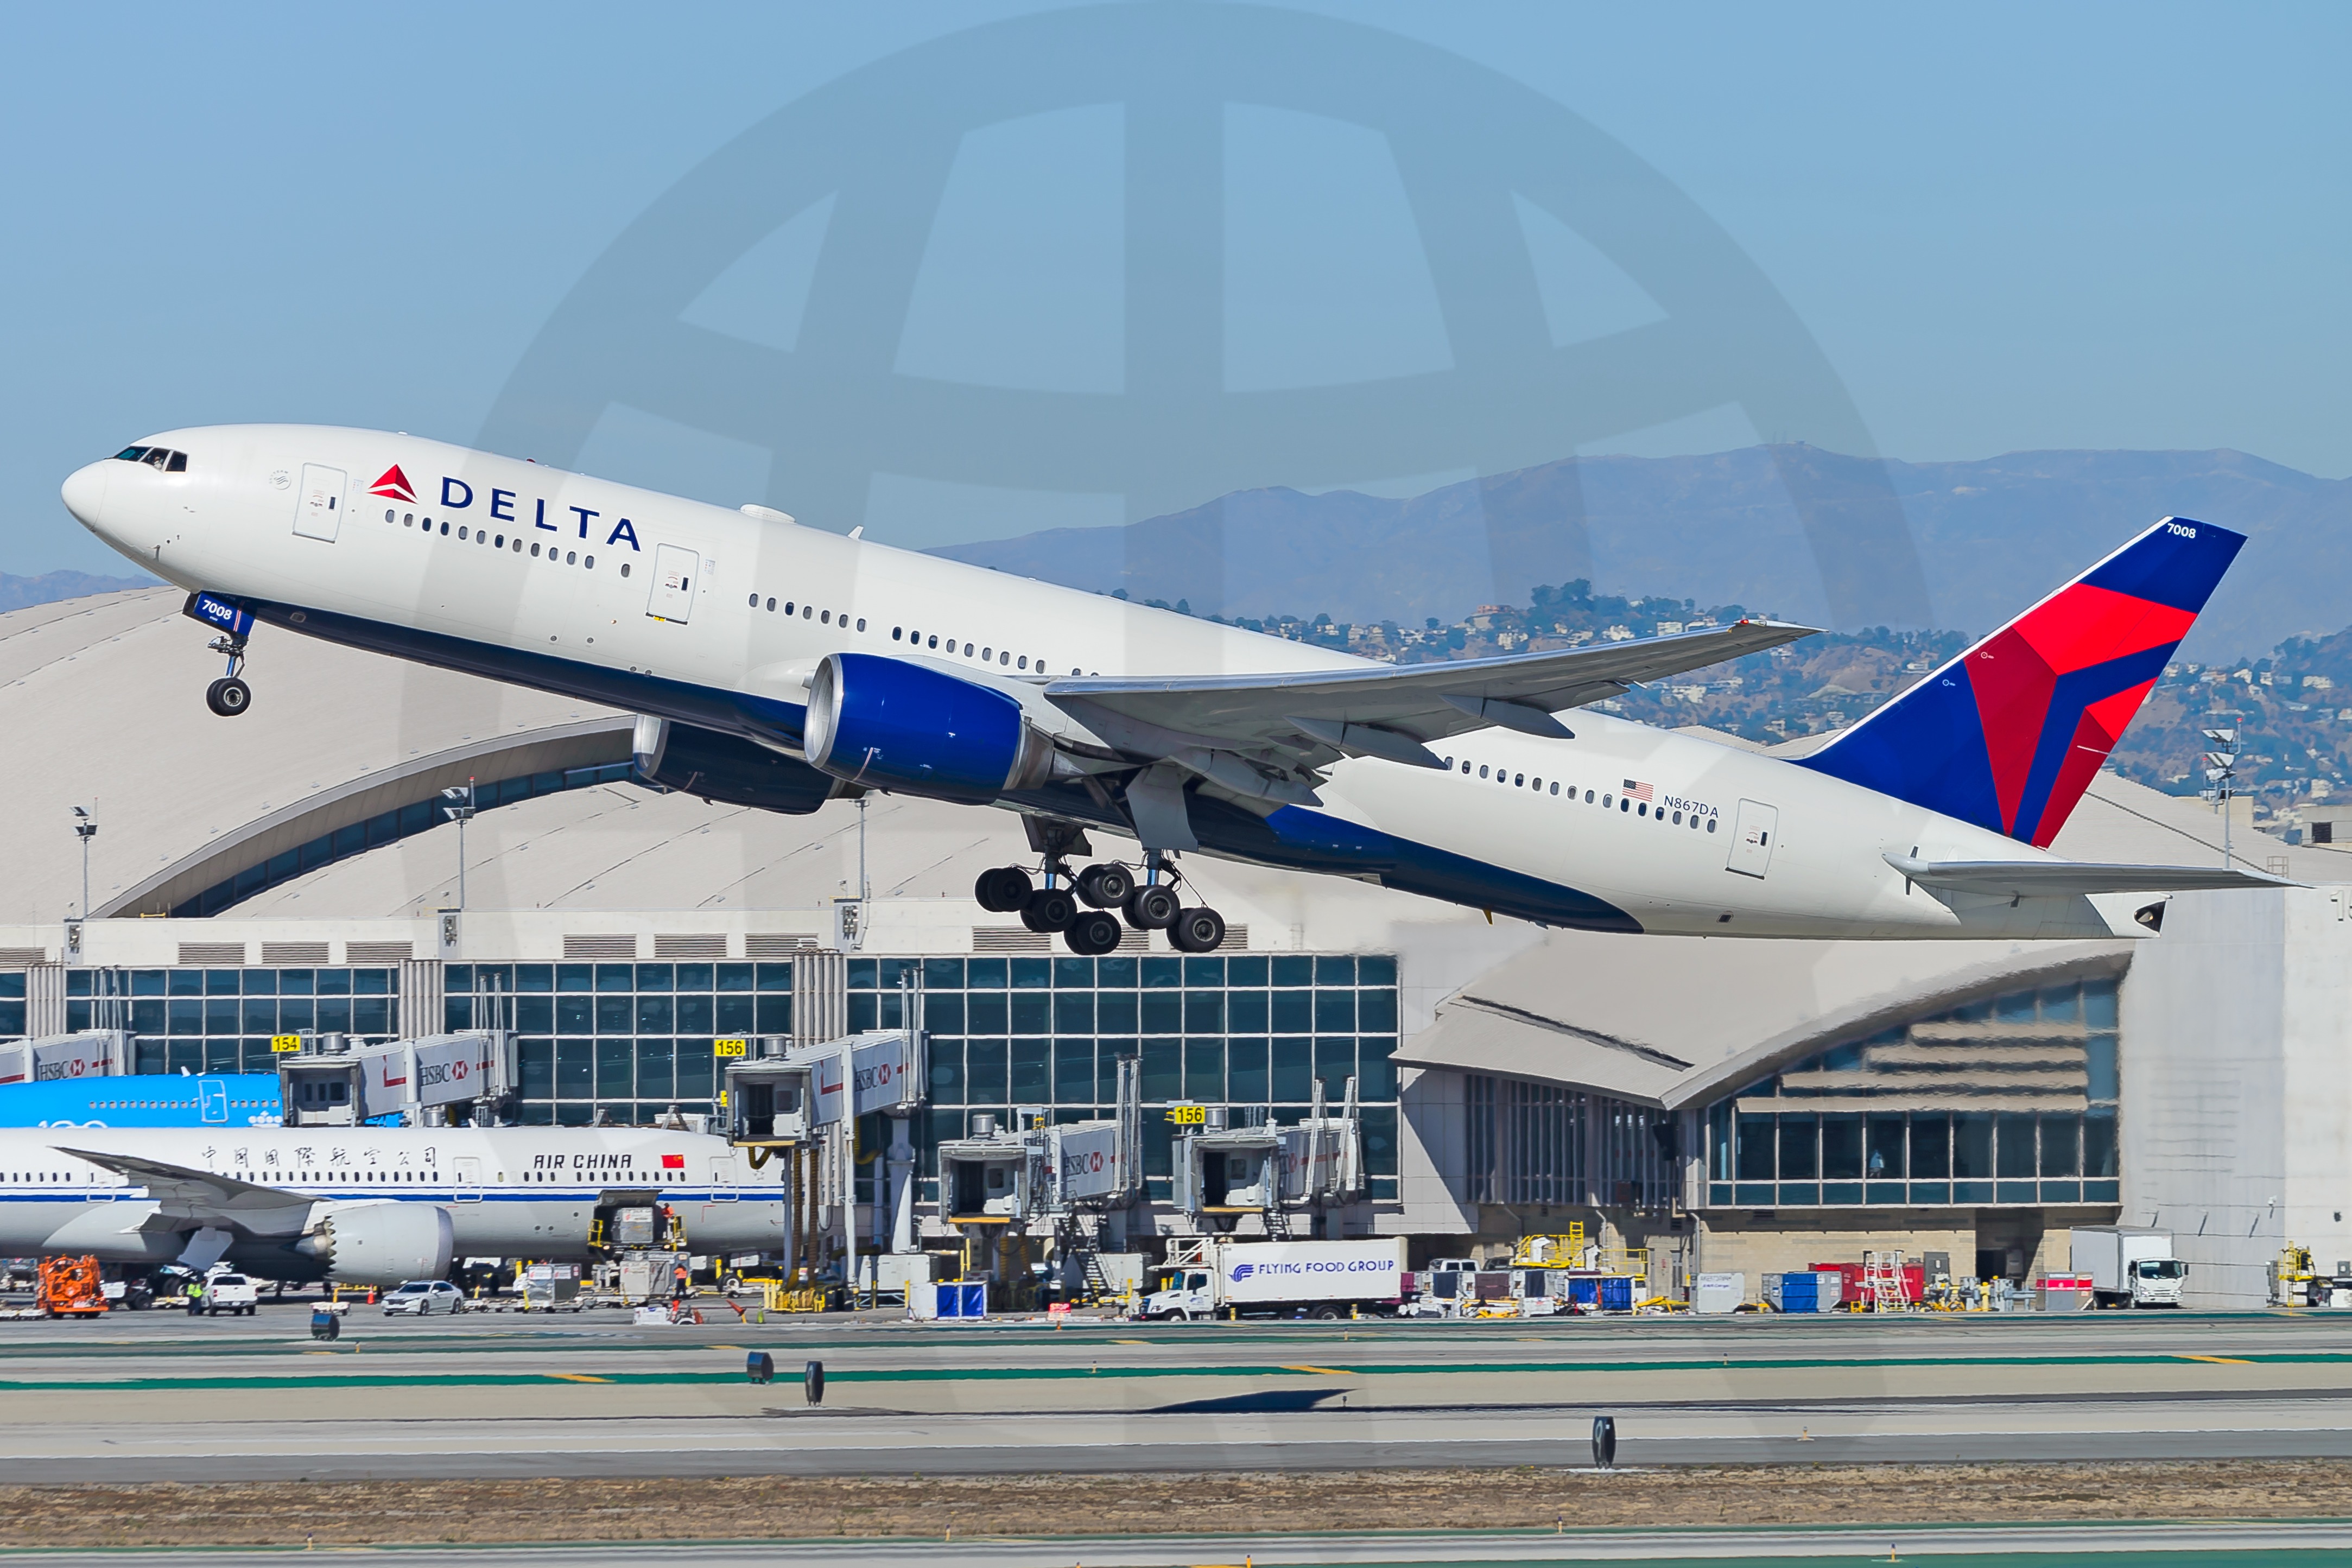 Photo of N867da - Delta Airlines Boeing 777-200ER by 